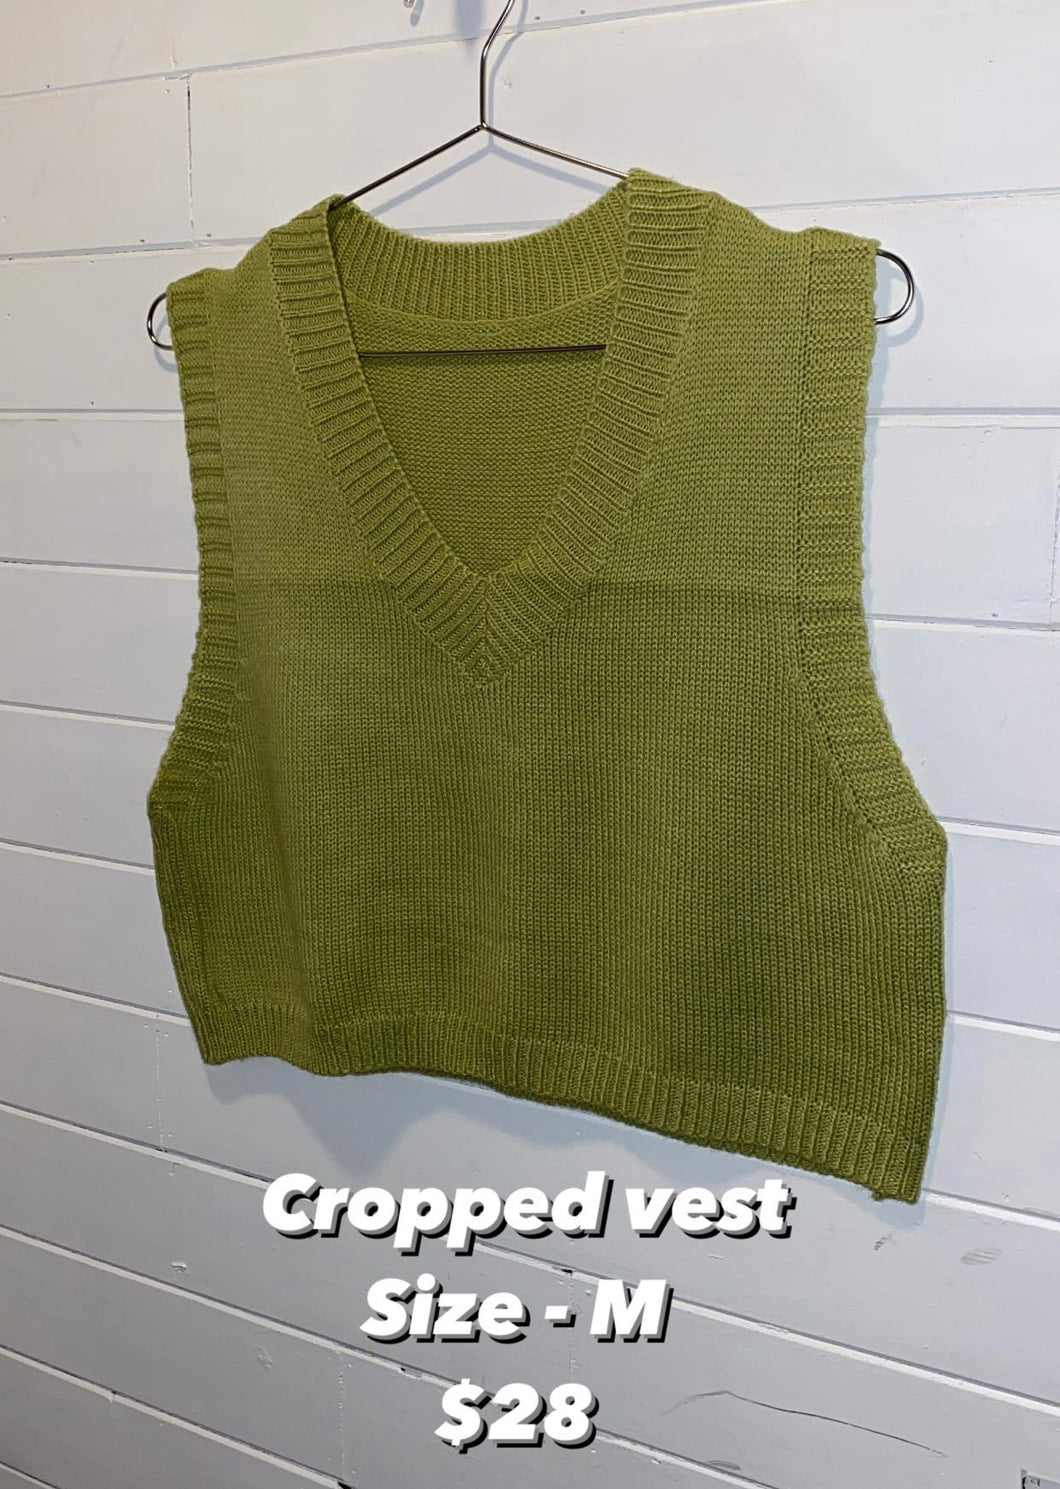 Cropped vest